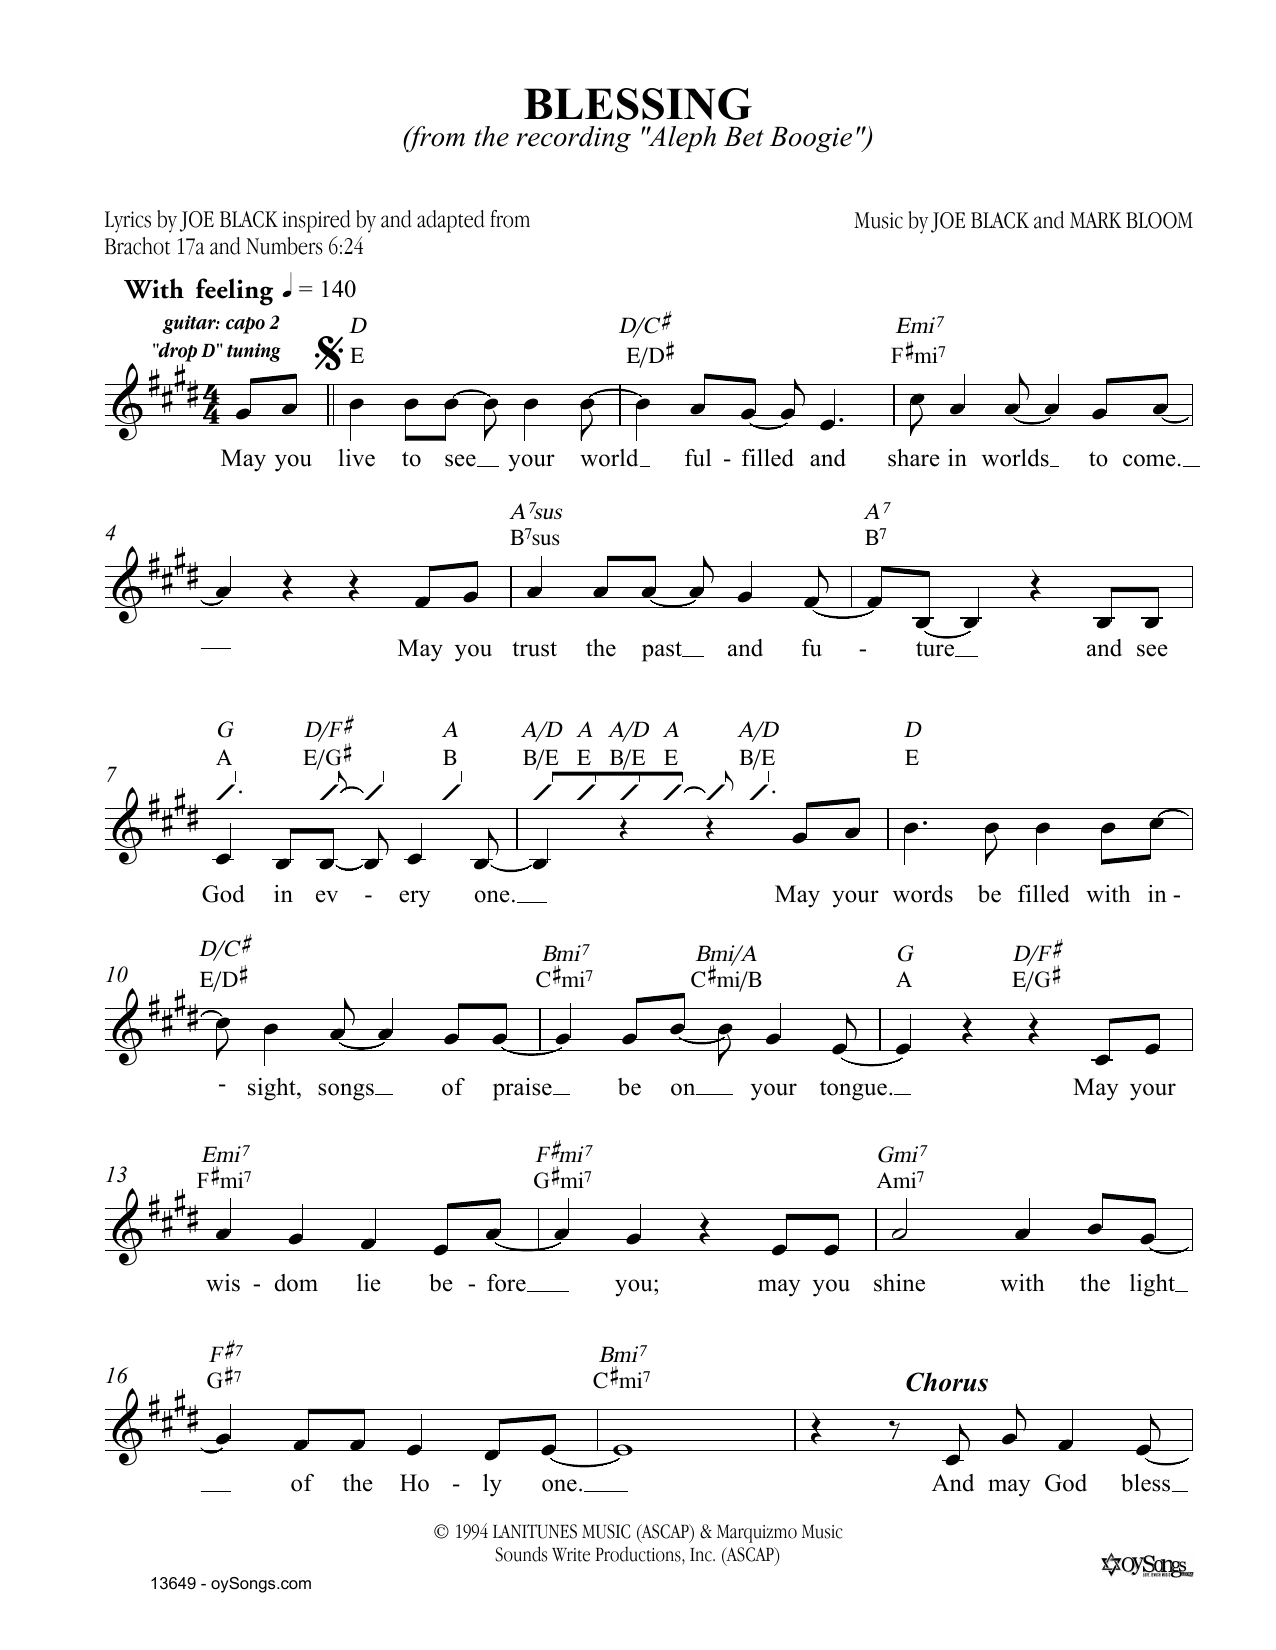 Joe Black Blessing Sheet Music Notes & Chords for Melody Line, Lyrics & Chords - Download or Print PDF